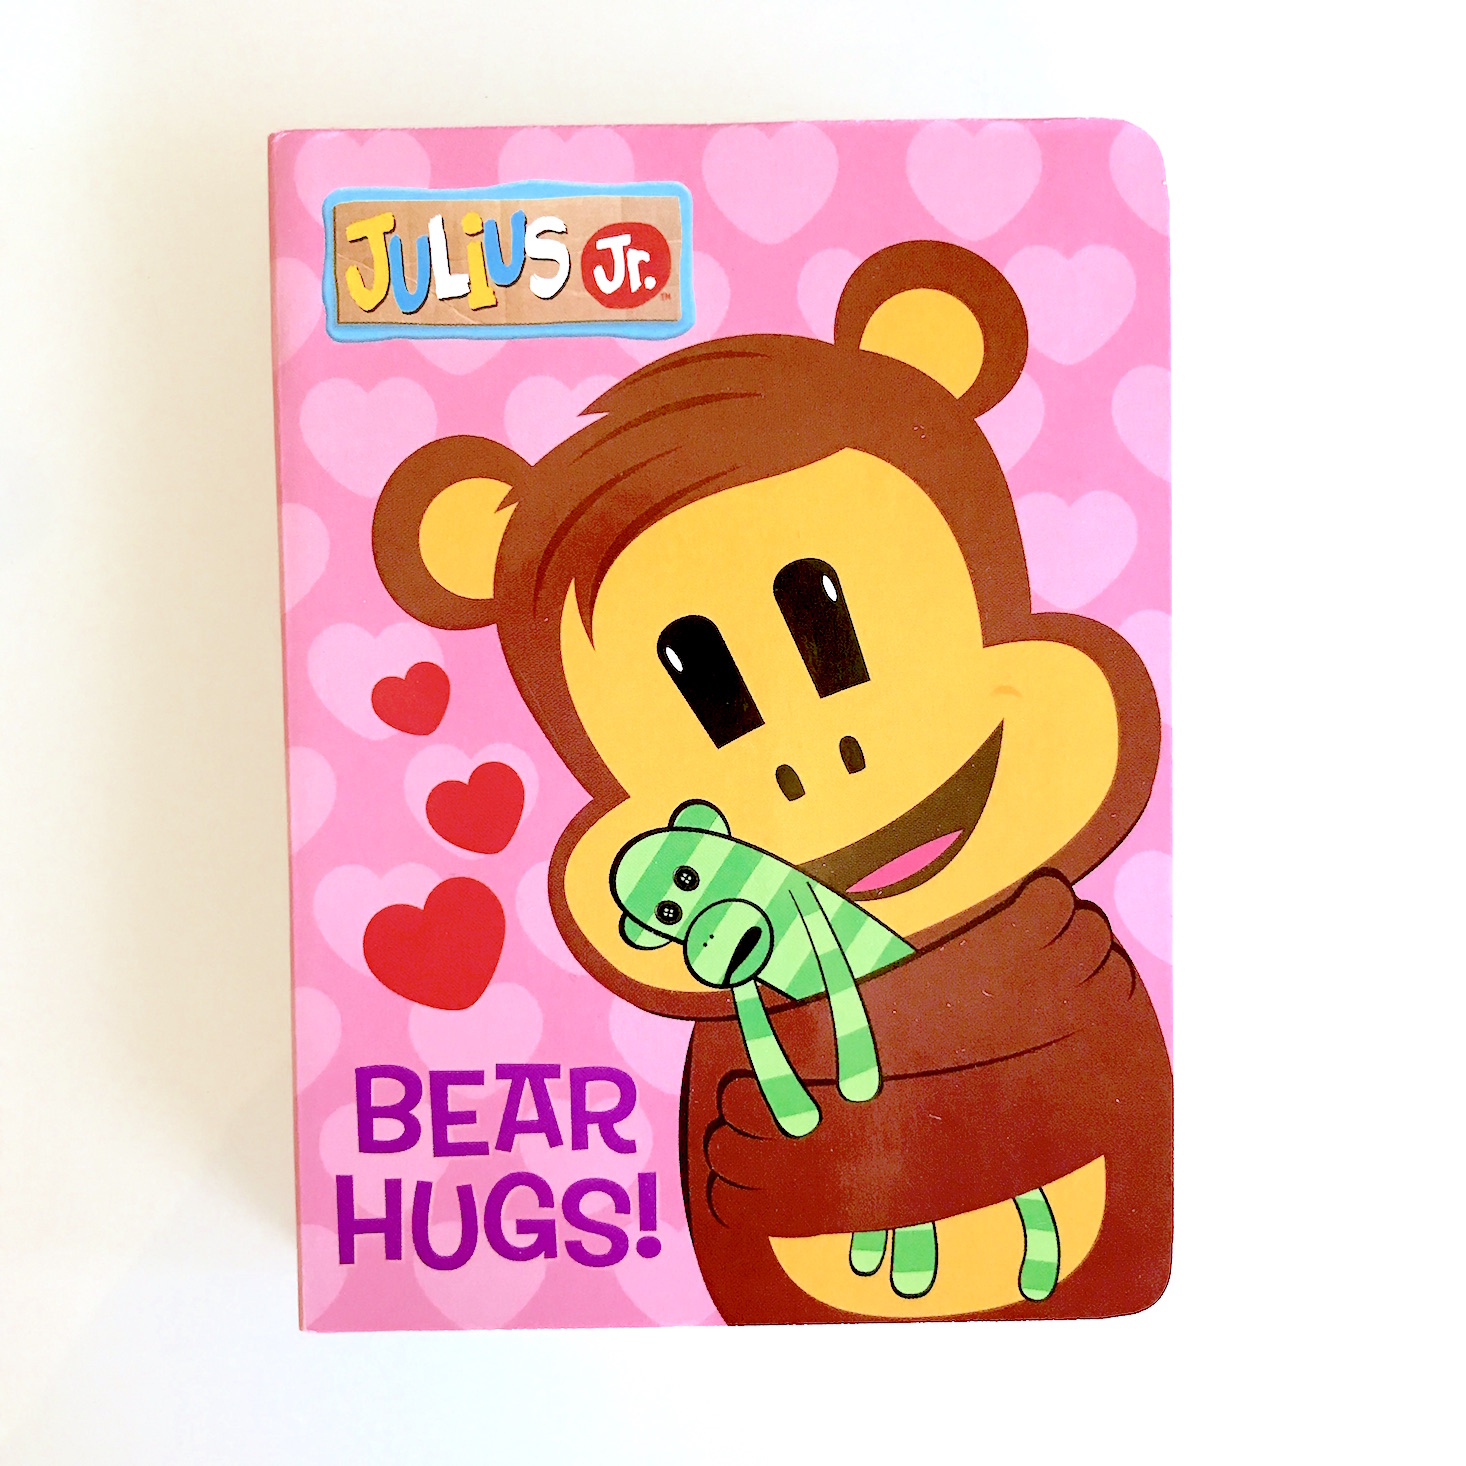 My First Reading Club February 2018 - bear hugs